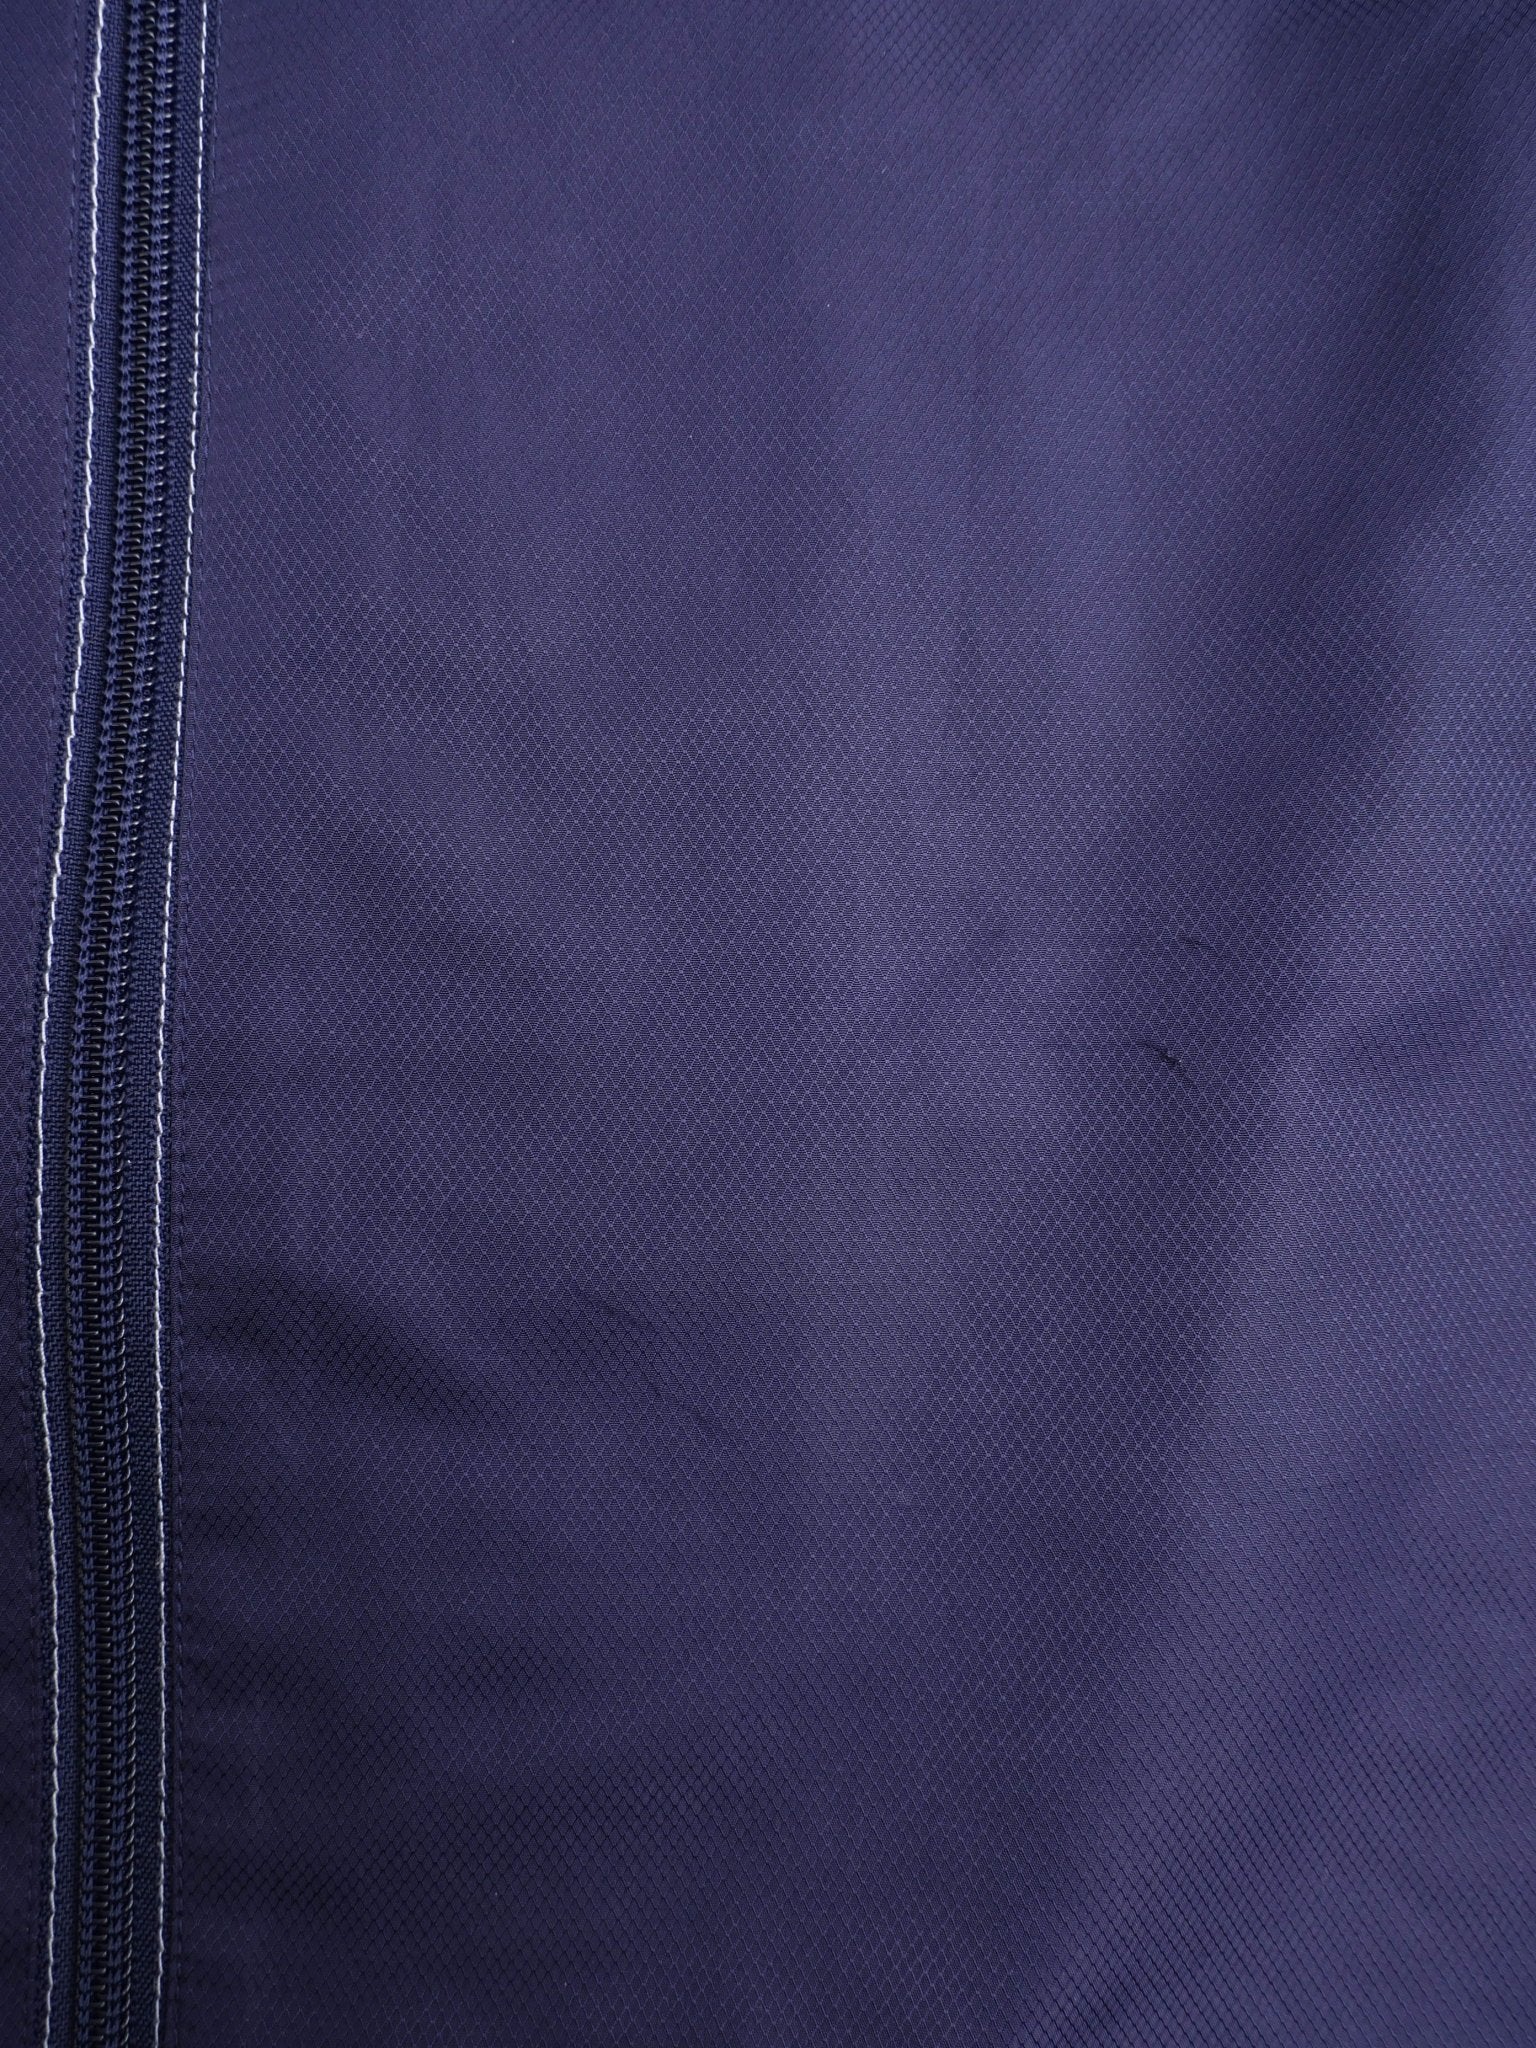 Umbro embroidered Logo two toned Track Jacket - Peeces